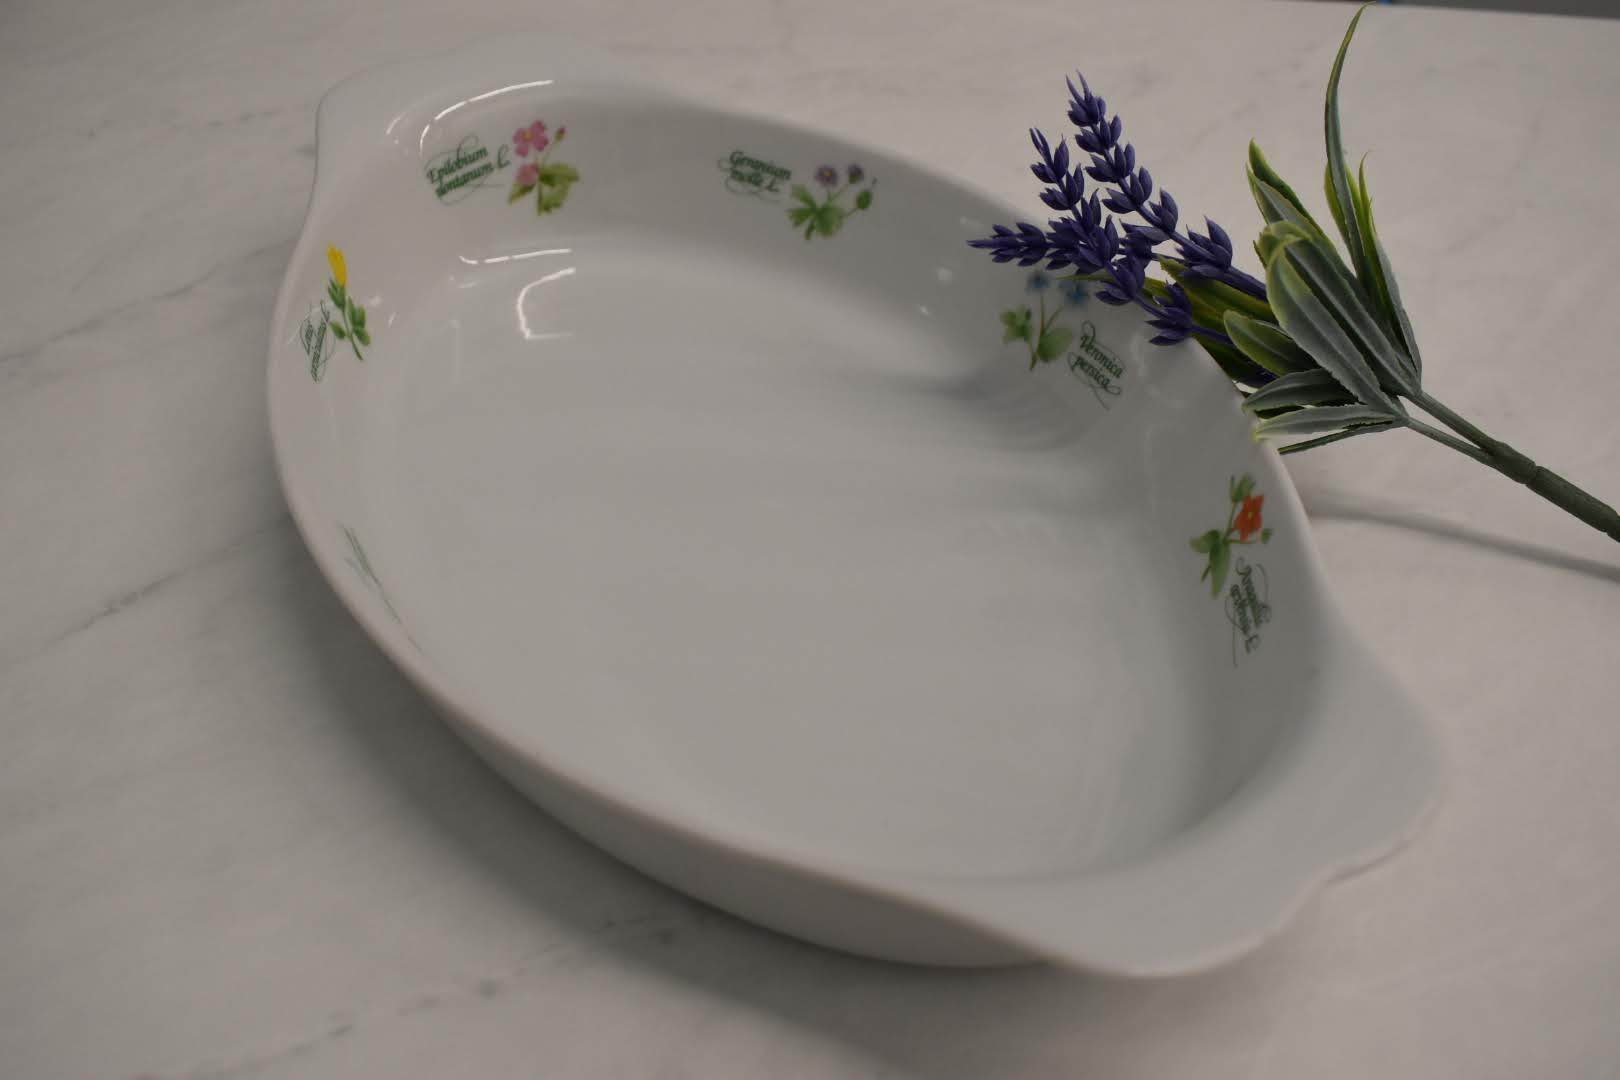 Fine Porcelain China - Botanical Floral Pattern - Au Gratin Casserole - Mid Century